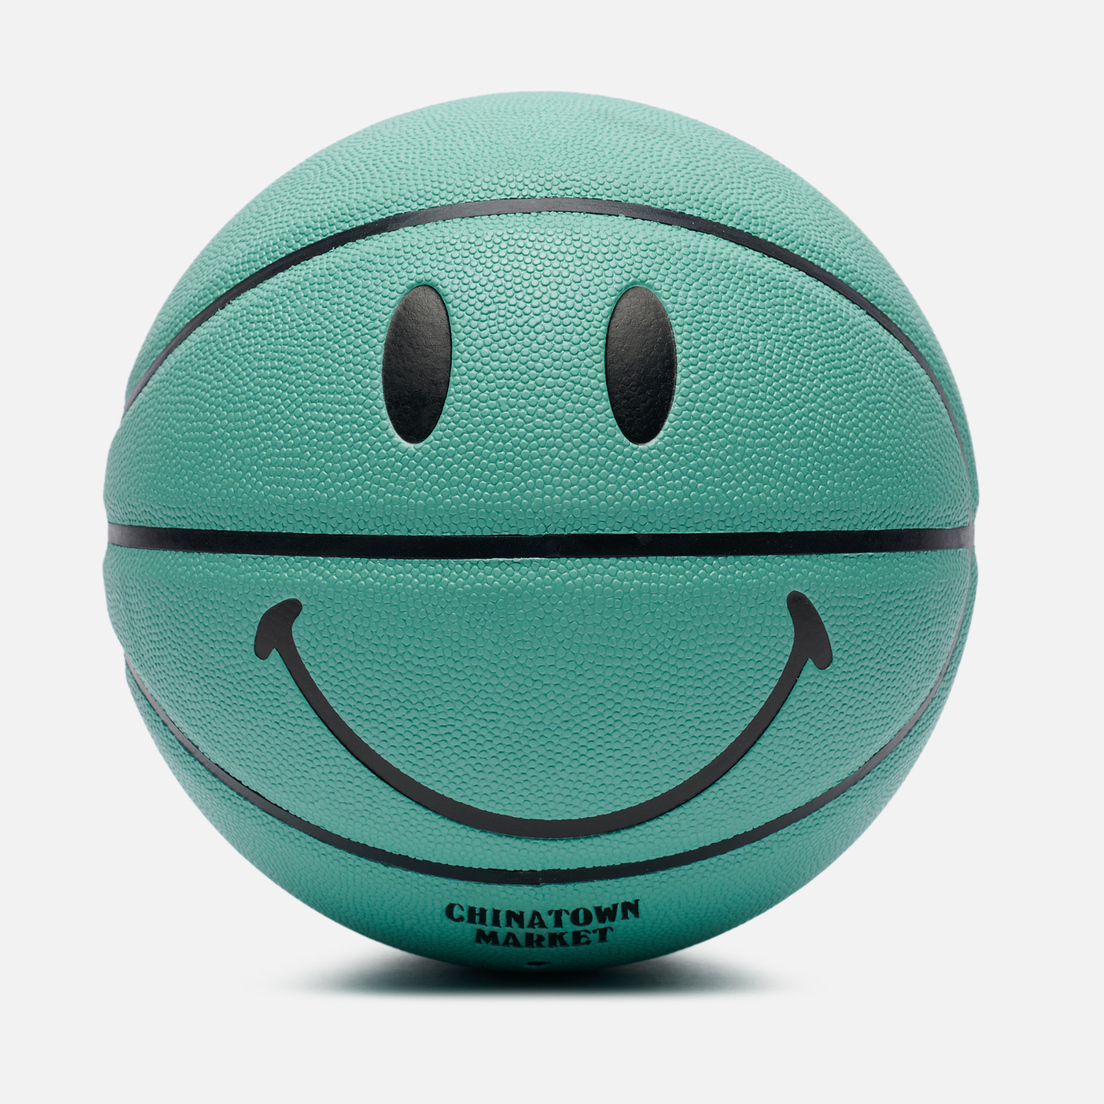 Chinatown Market Баскетбольный мяч Smiley Breakfast